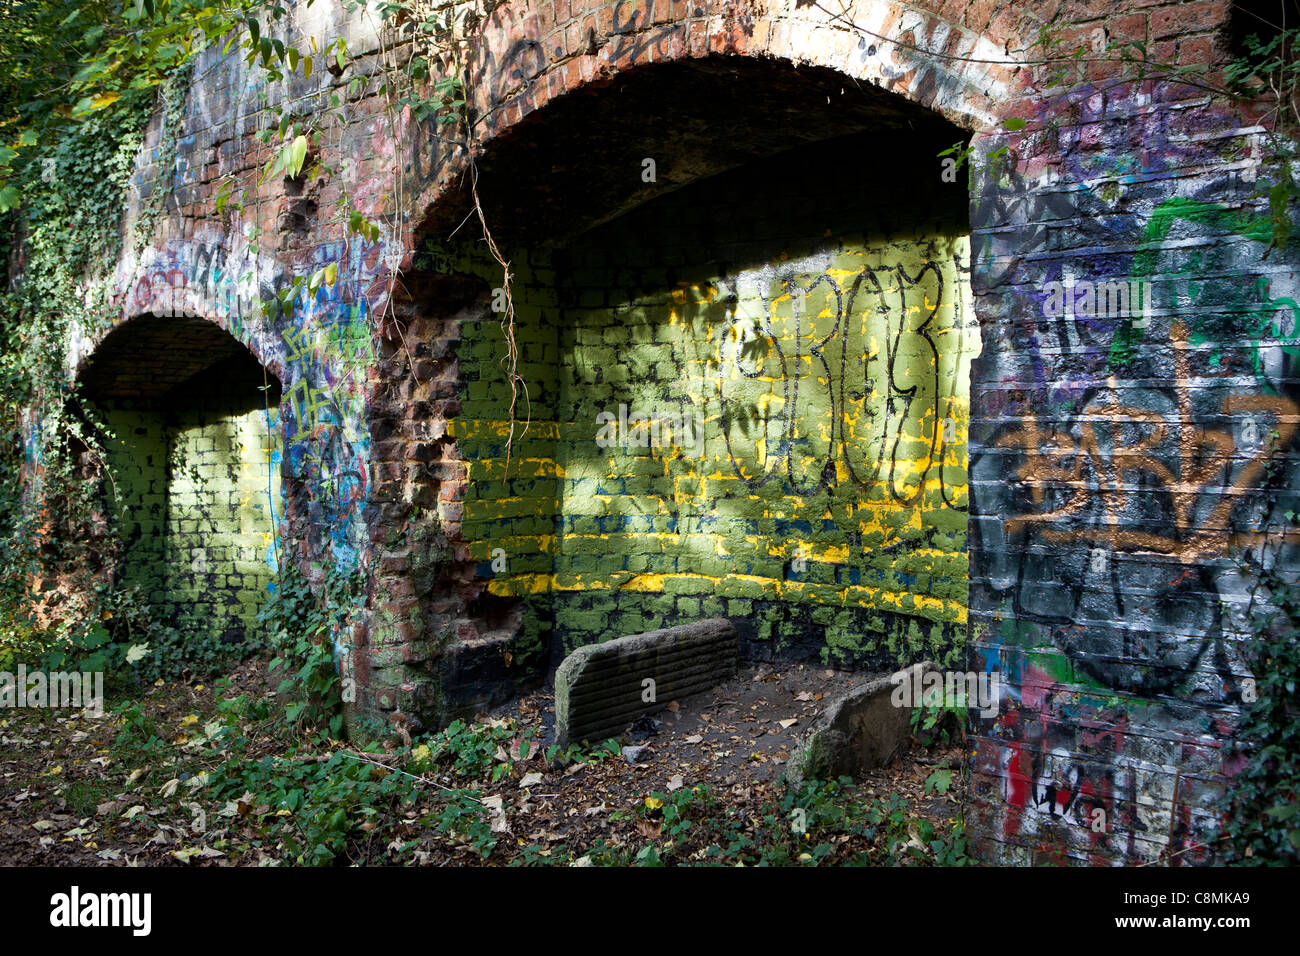 Graffiti covered disused railway arch. Stock Photo